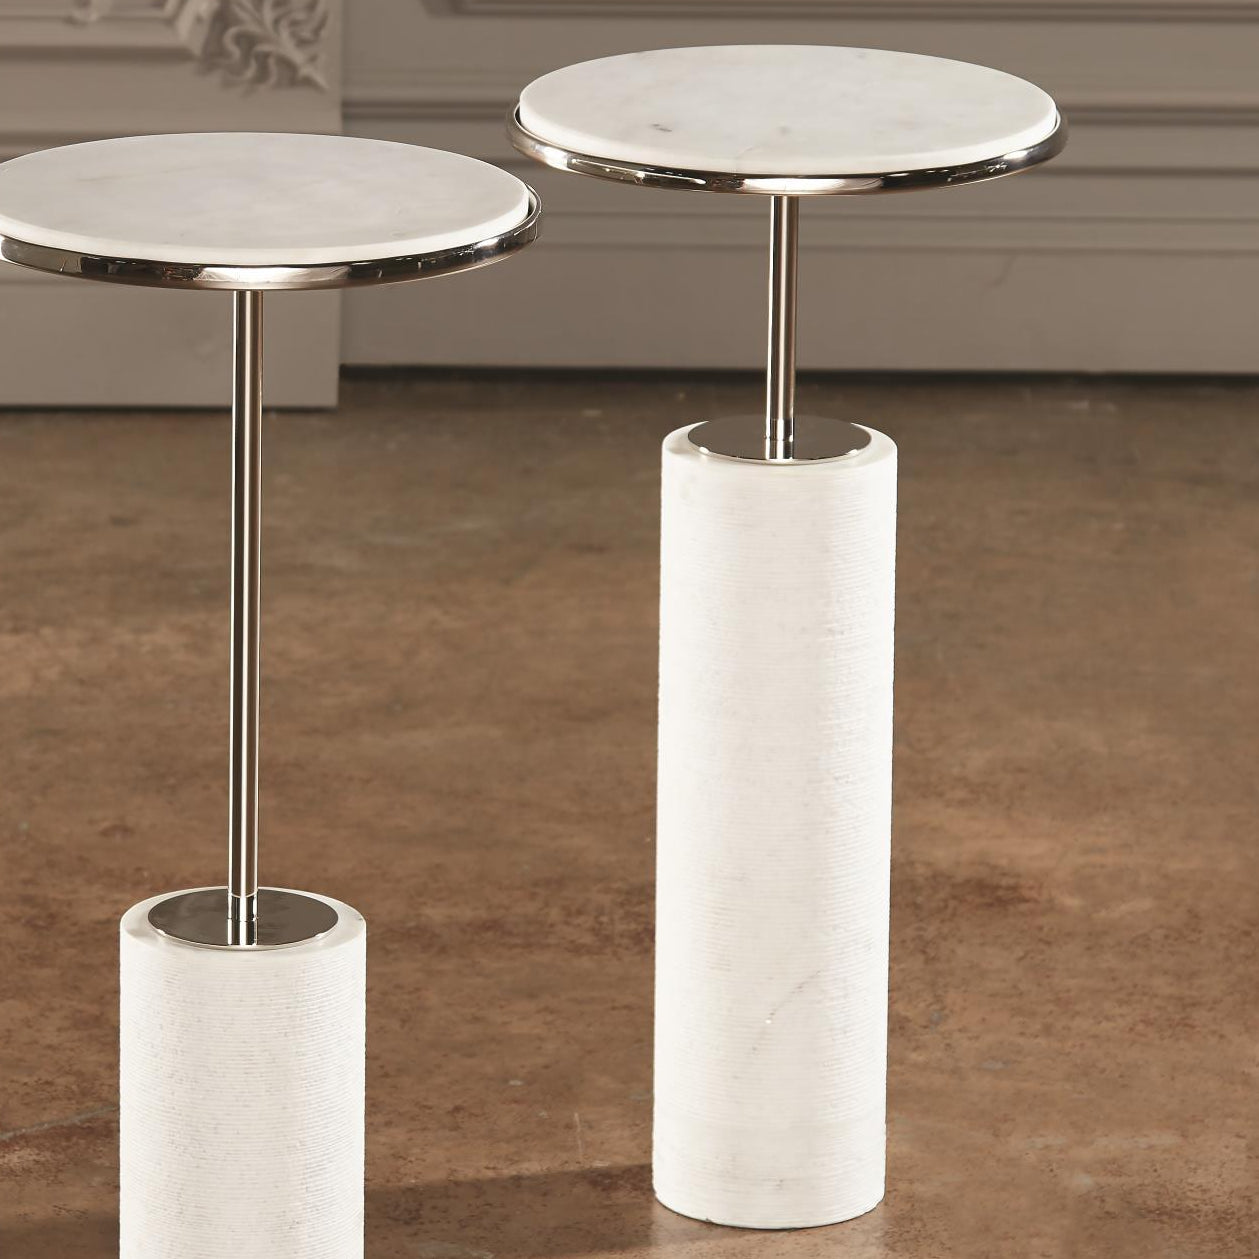 Tall Cored Marble Table - Nickel - Grats Decor Interior Design & Build Inc.